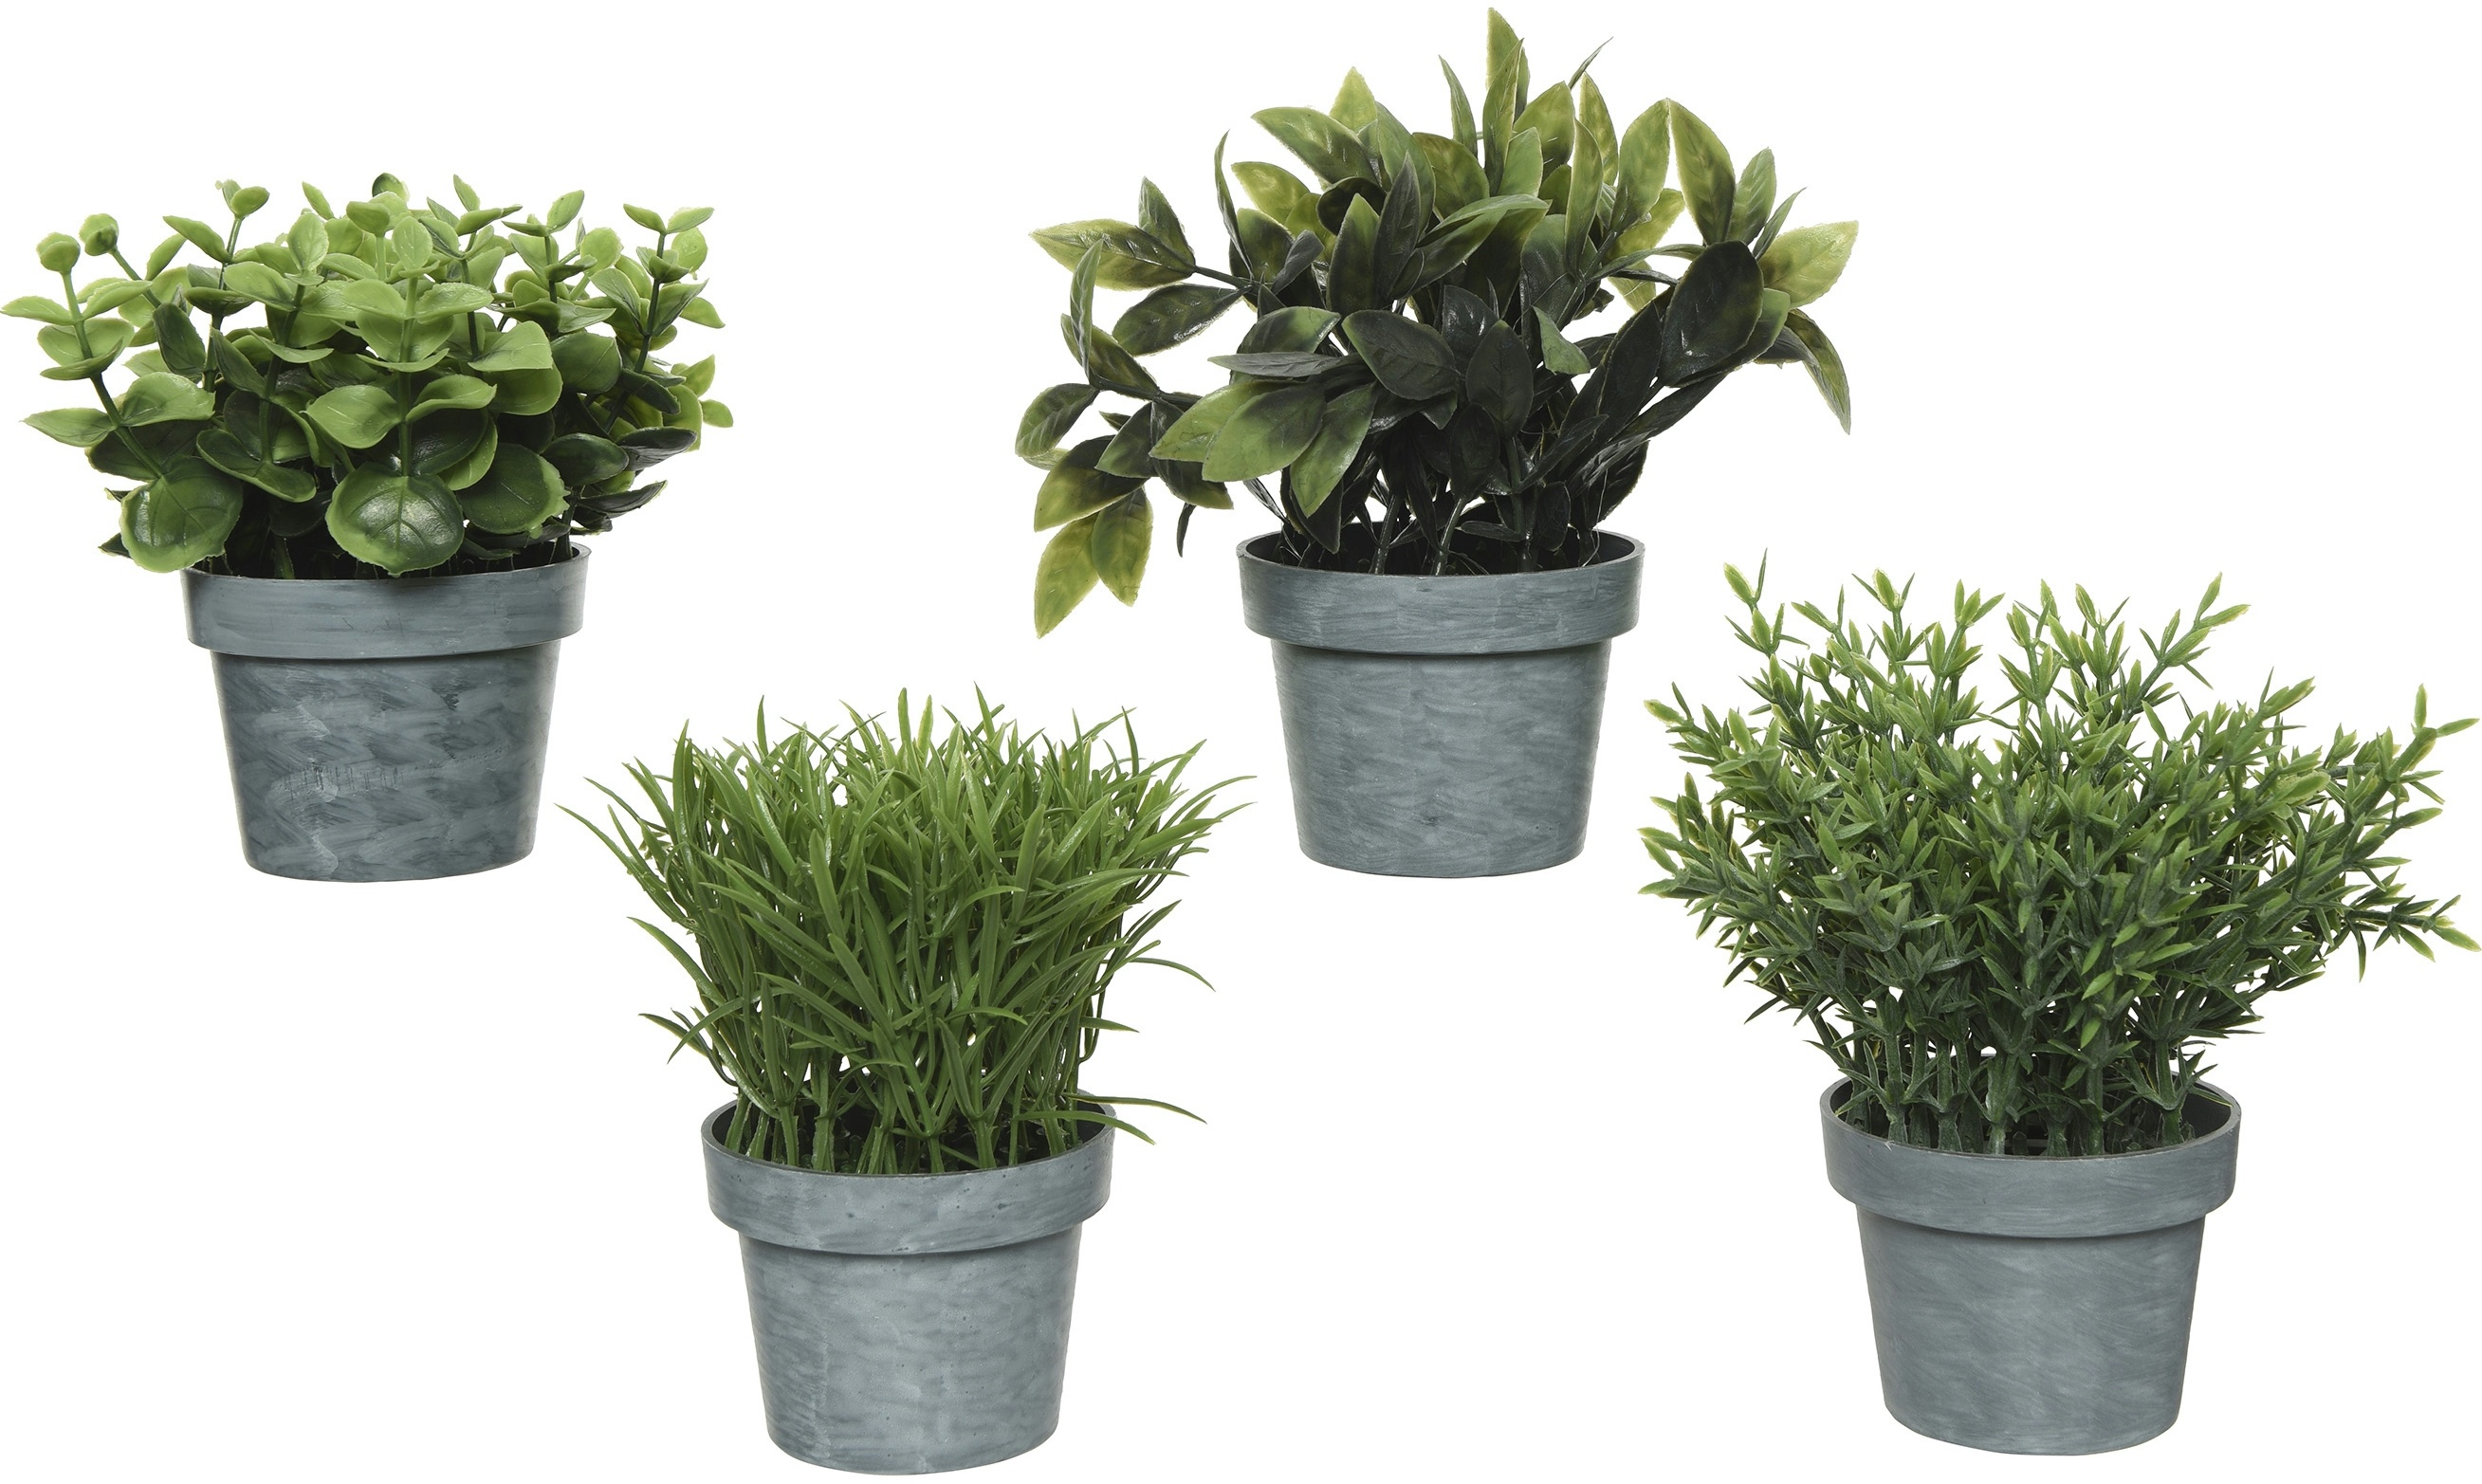 Decoris 1 Kunstpflanze 13cm im Topf Mini künstliche Grünpflanzen Plastikpflanzen Deko